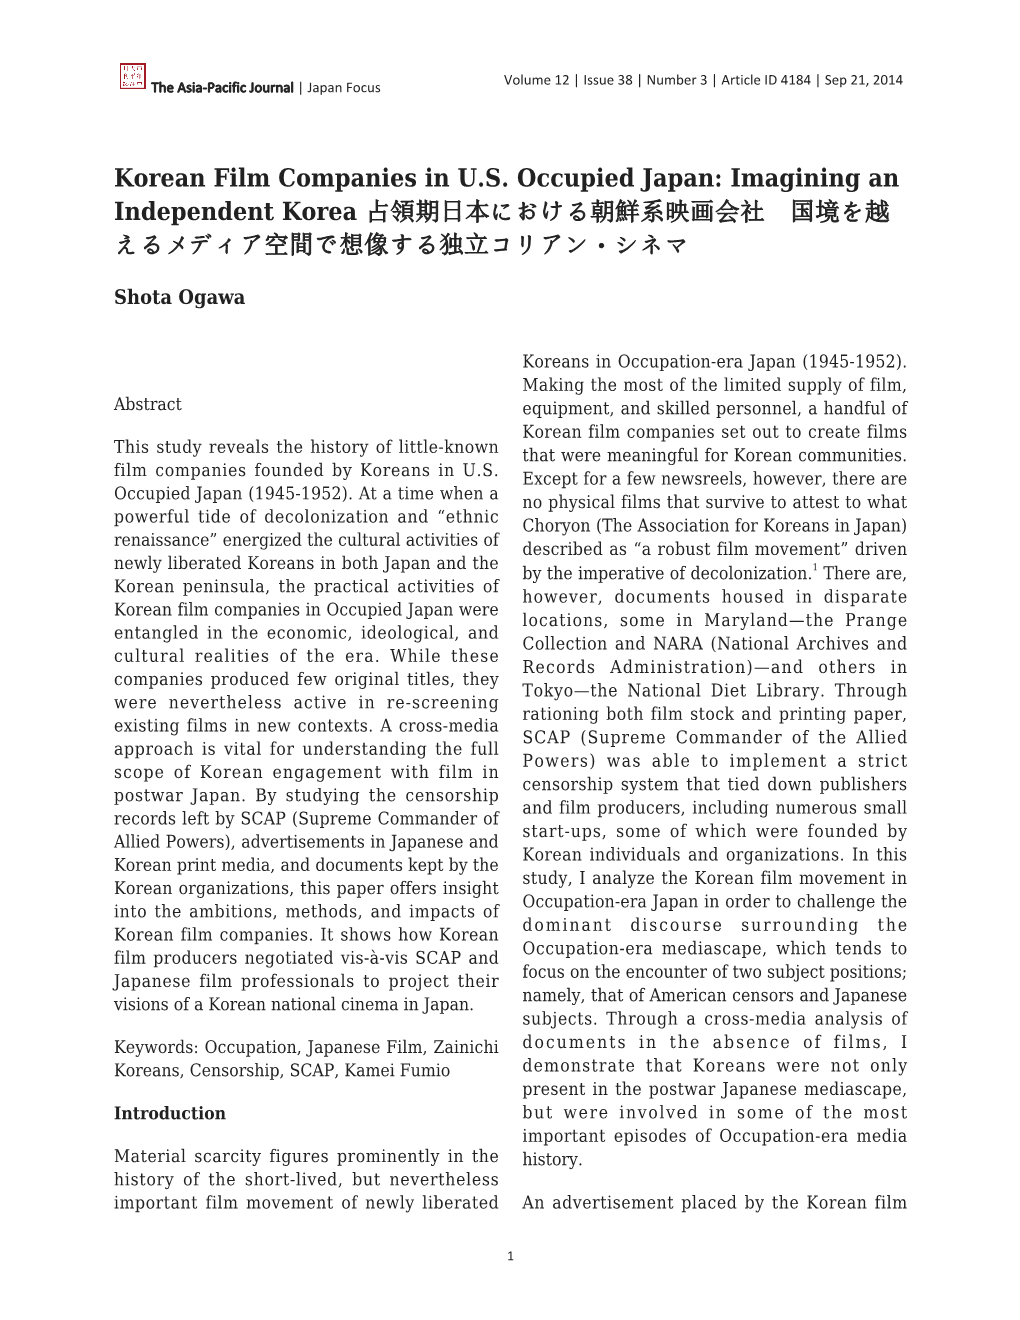 Korean Film Companies in U.S. Occupied Japan: Imagining an Independent Korea 占領期日本における朝鮮系映画会社 国境を越 えるメディア空間で想像する独立コリアン・シネマ